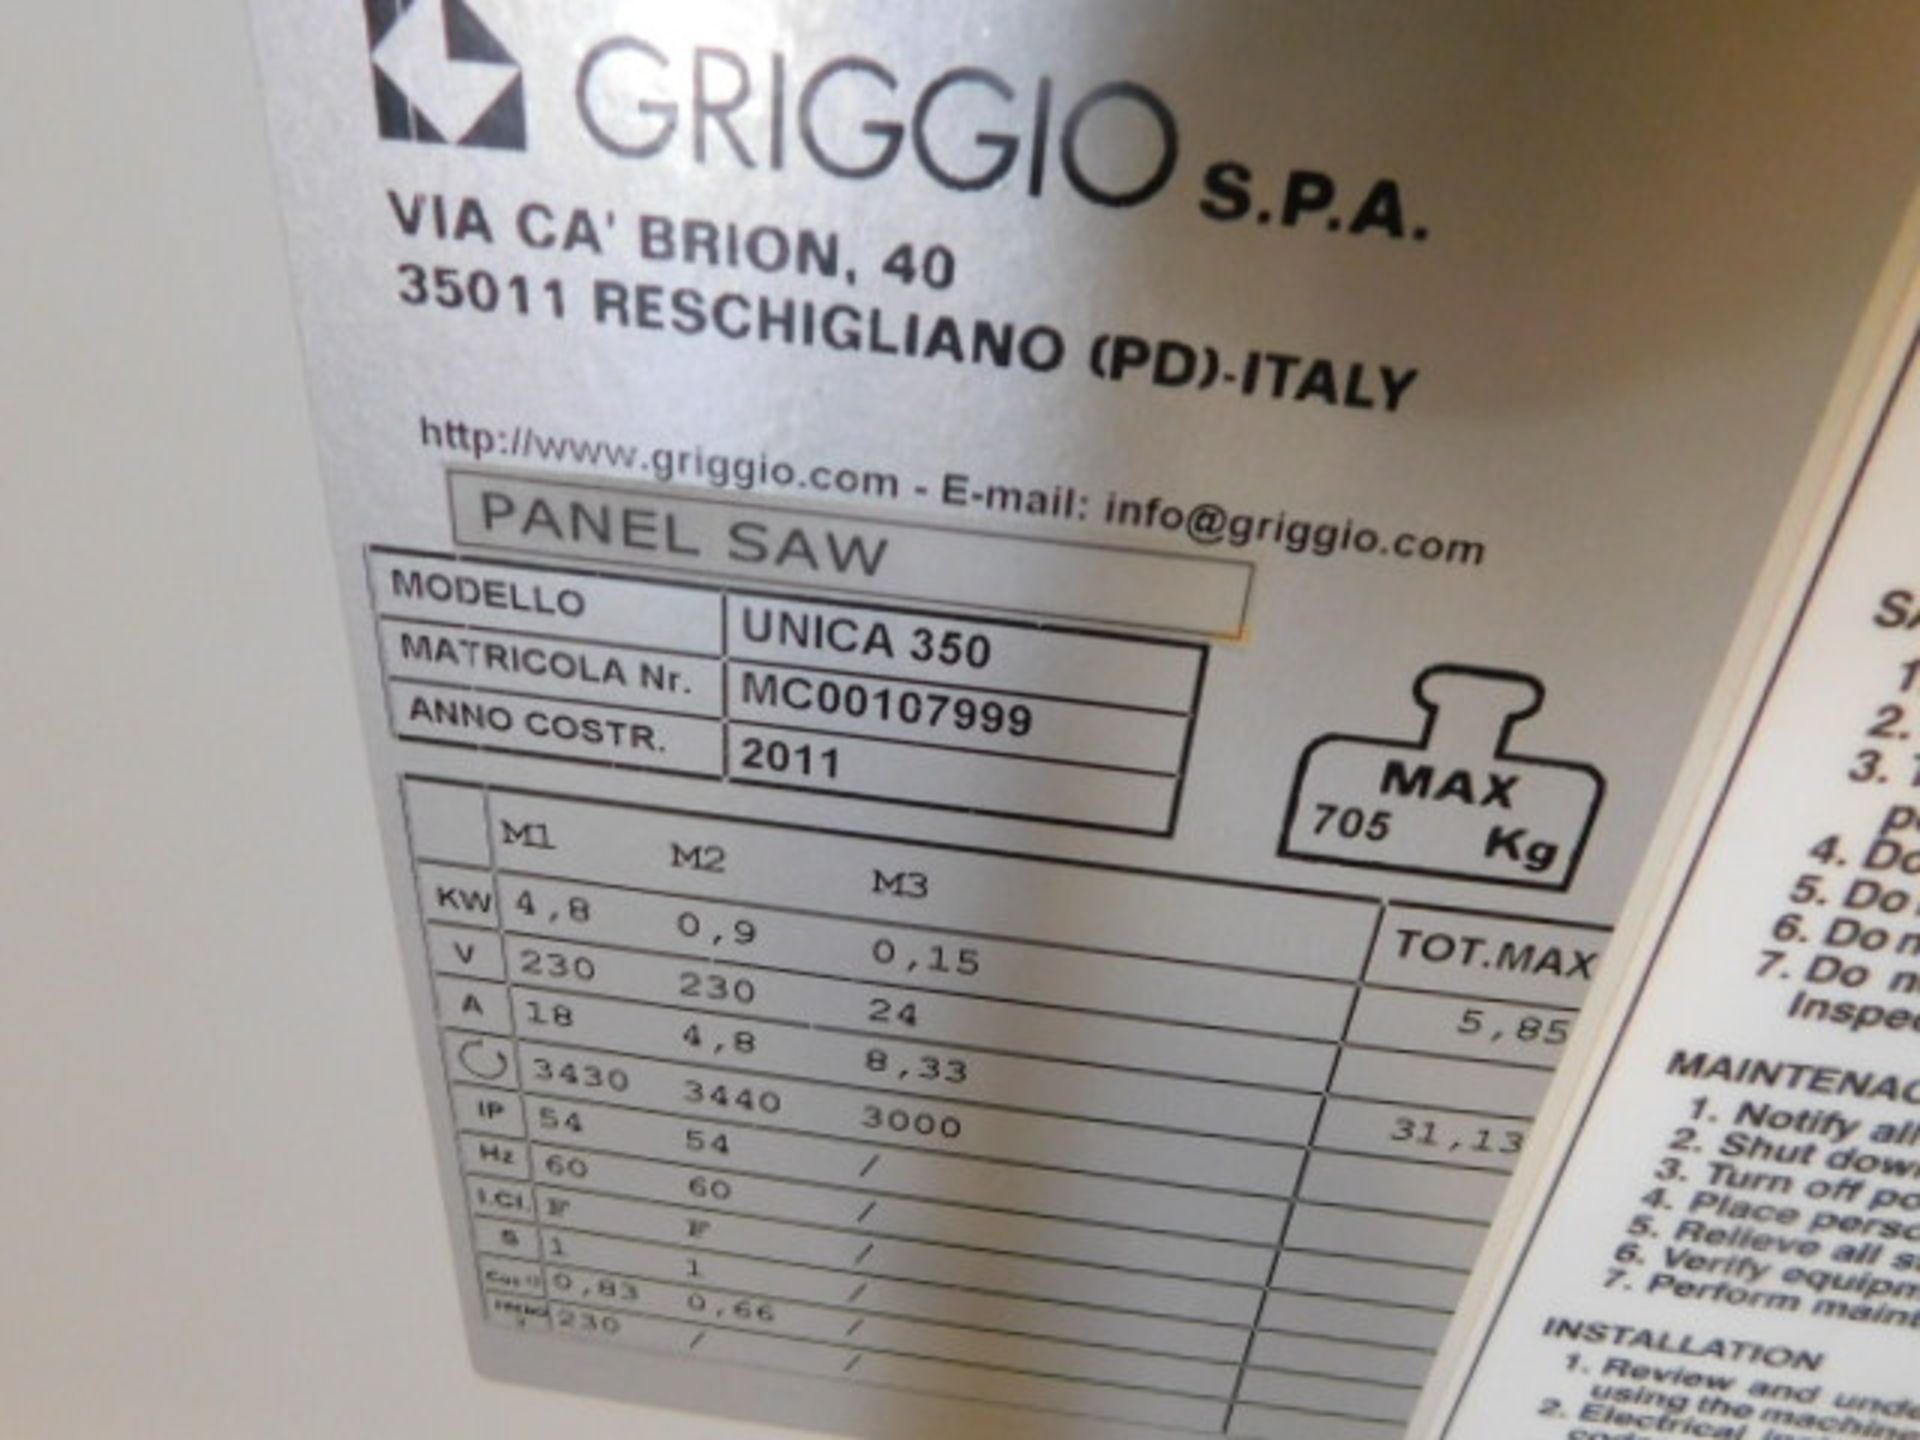 ’11 GRIGGIO UNICA 350 SLIDING PANEL SAW, 230V, 4.8KW, SIEMENS DRO CONTROLS, S/N MC00107 999 W/ - Image 4 of 4